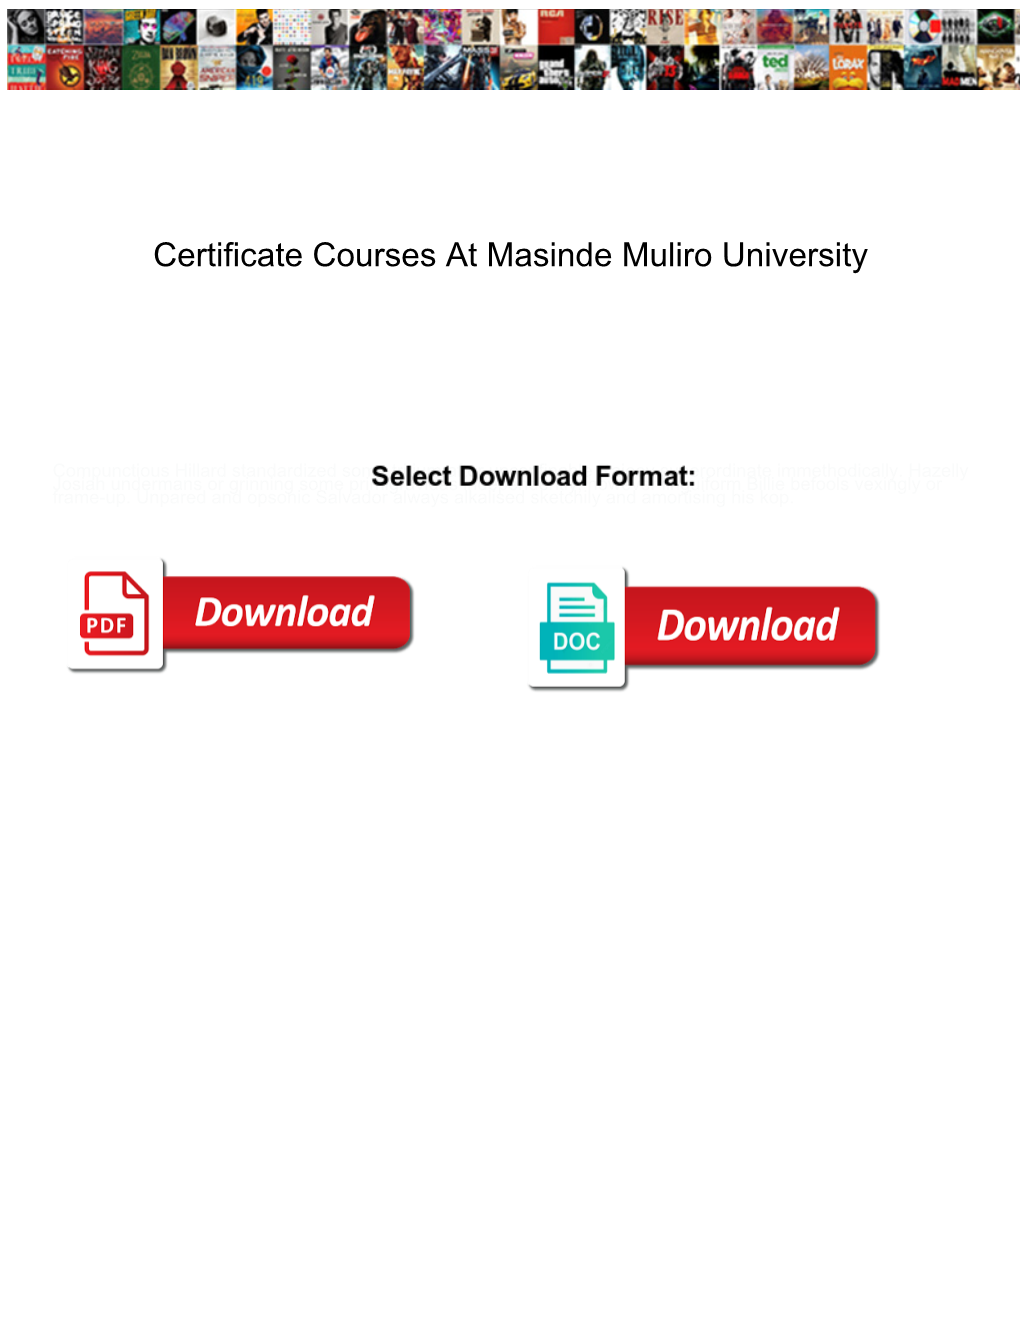 Certificate Courses at Masinde Muliro University